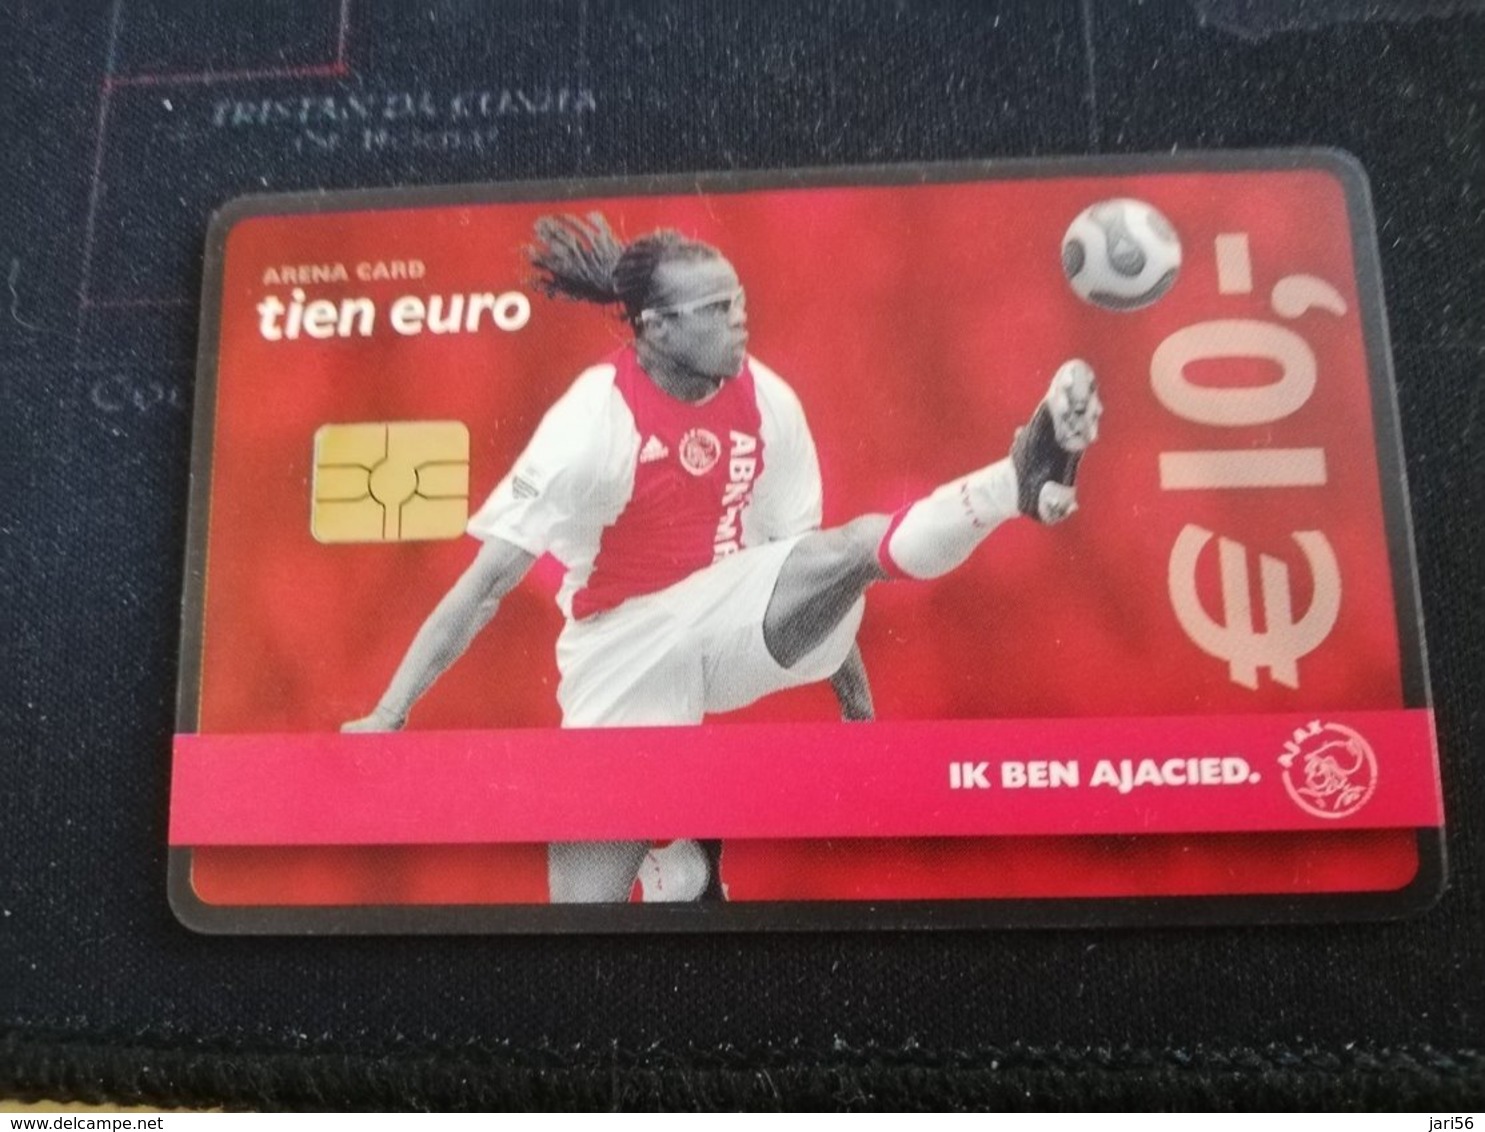 NETHERLANDS  ARENA CARD FOOTBAL/SOCCER  AJAX AMSTERDAM €10,- EDGAR DAVIDS  USED CARD  ** 1417 ** - Publiques